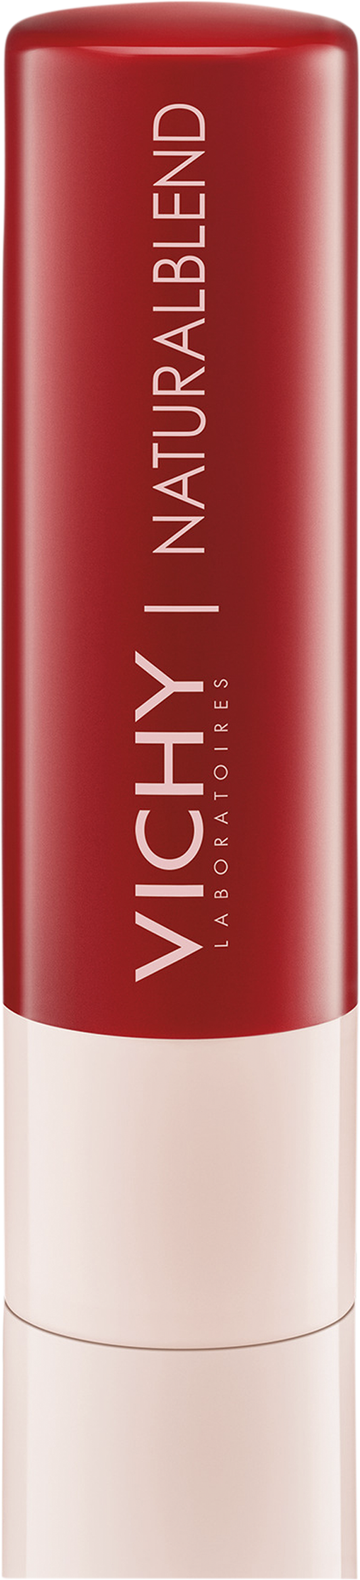 Vichy NaturalBlend lip balm - red